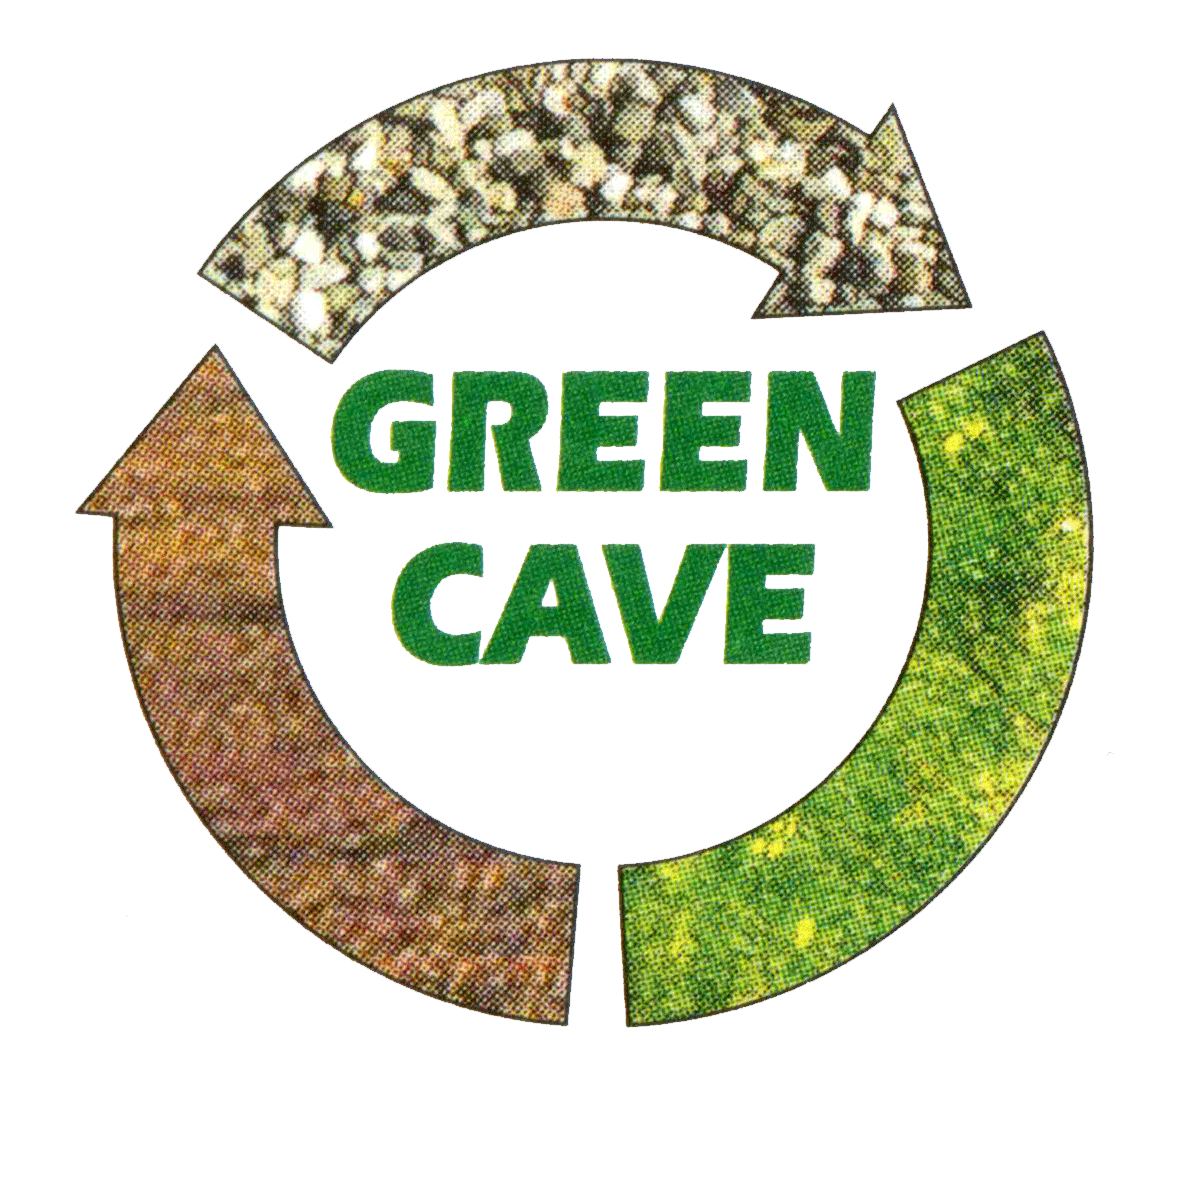 (c) Greencave.it